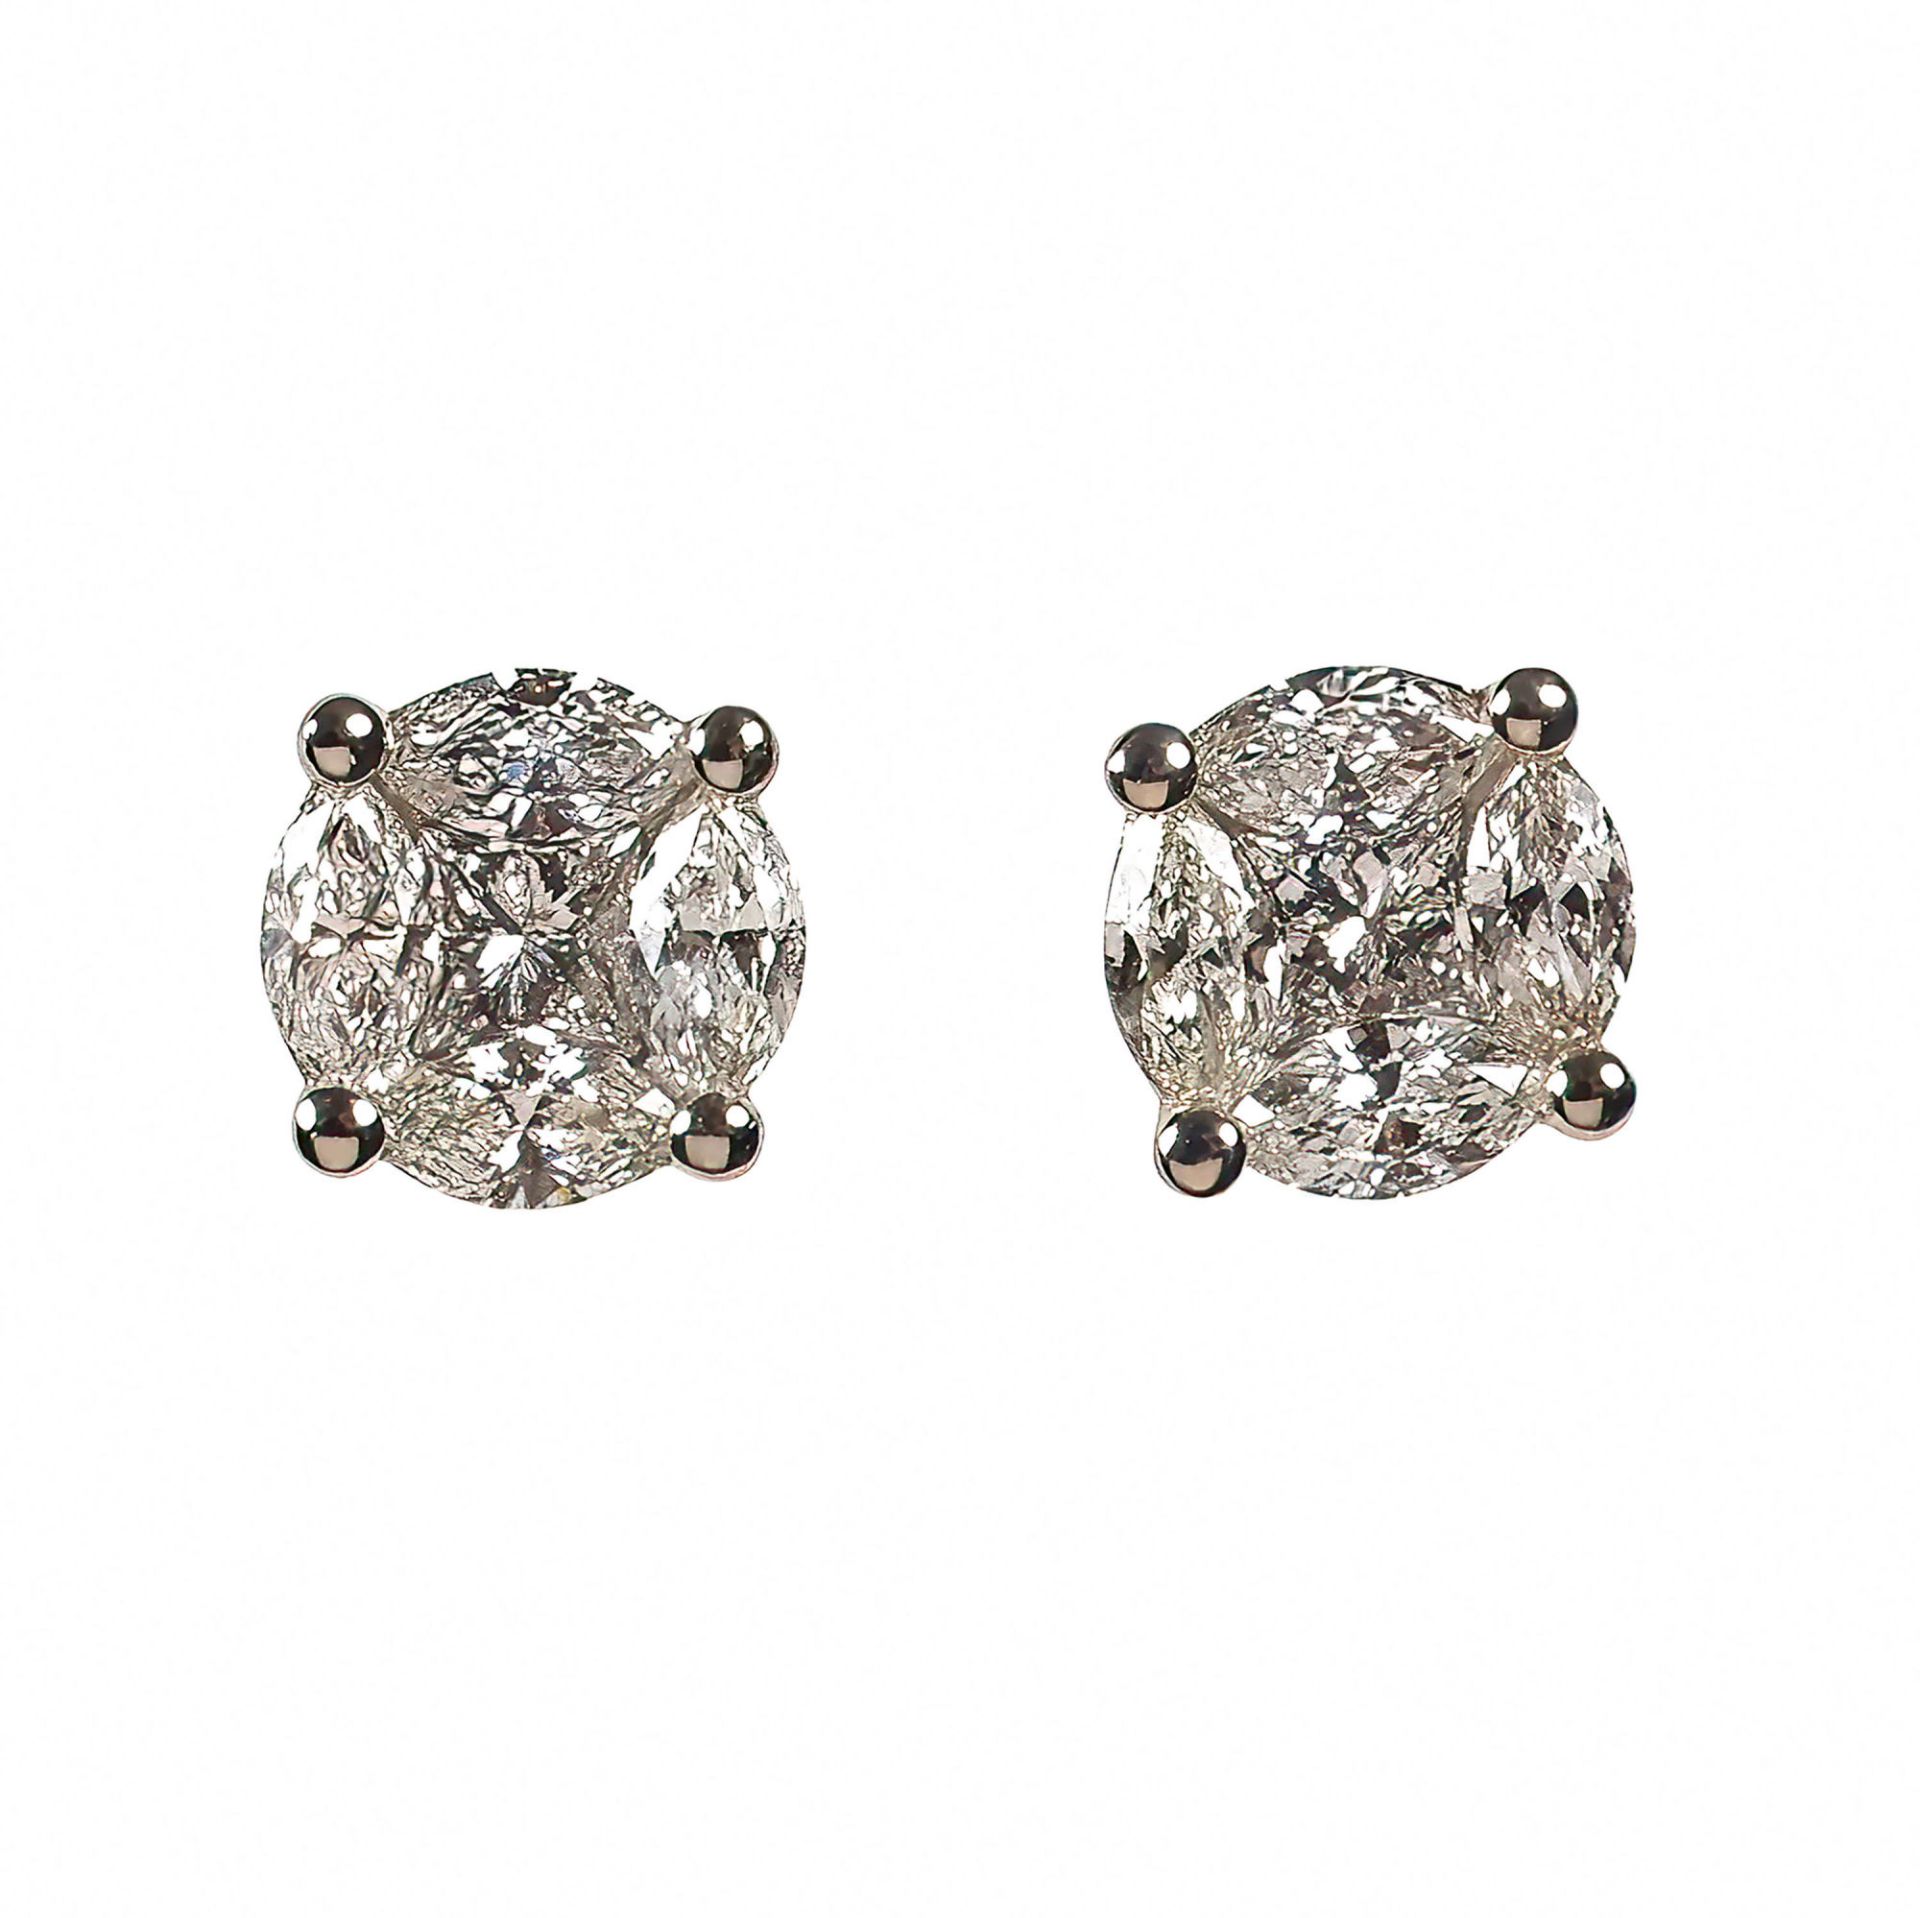 DIAMANT-OHRSTECKER / Diamond-earrings 